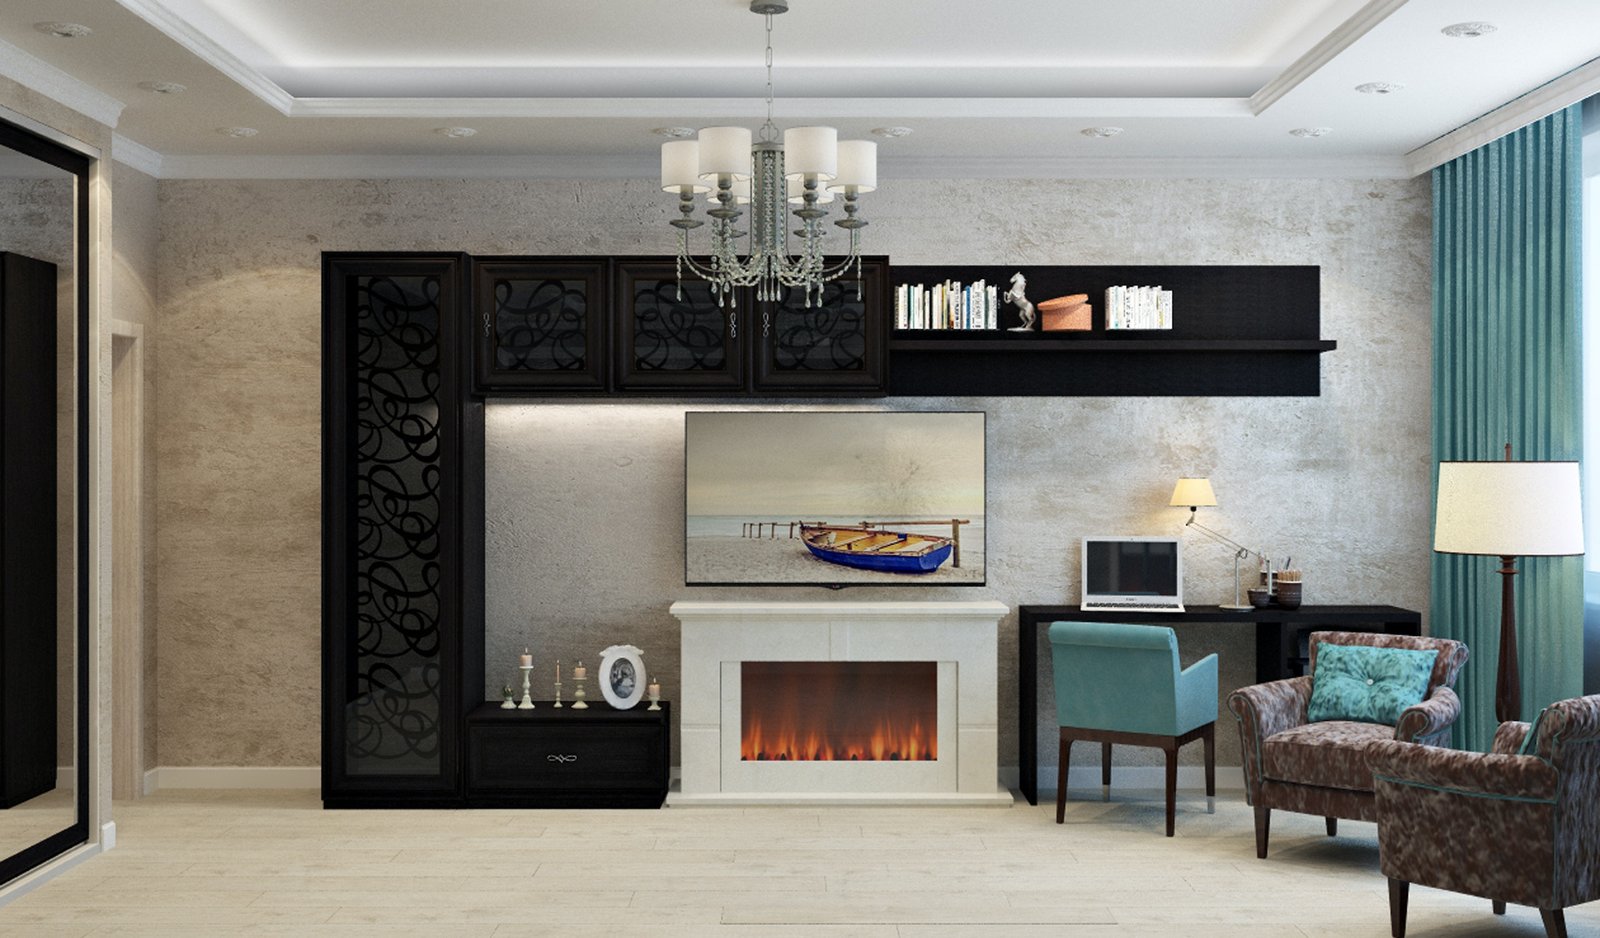 An aesthetic living room design